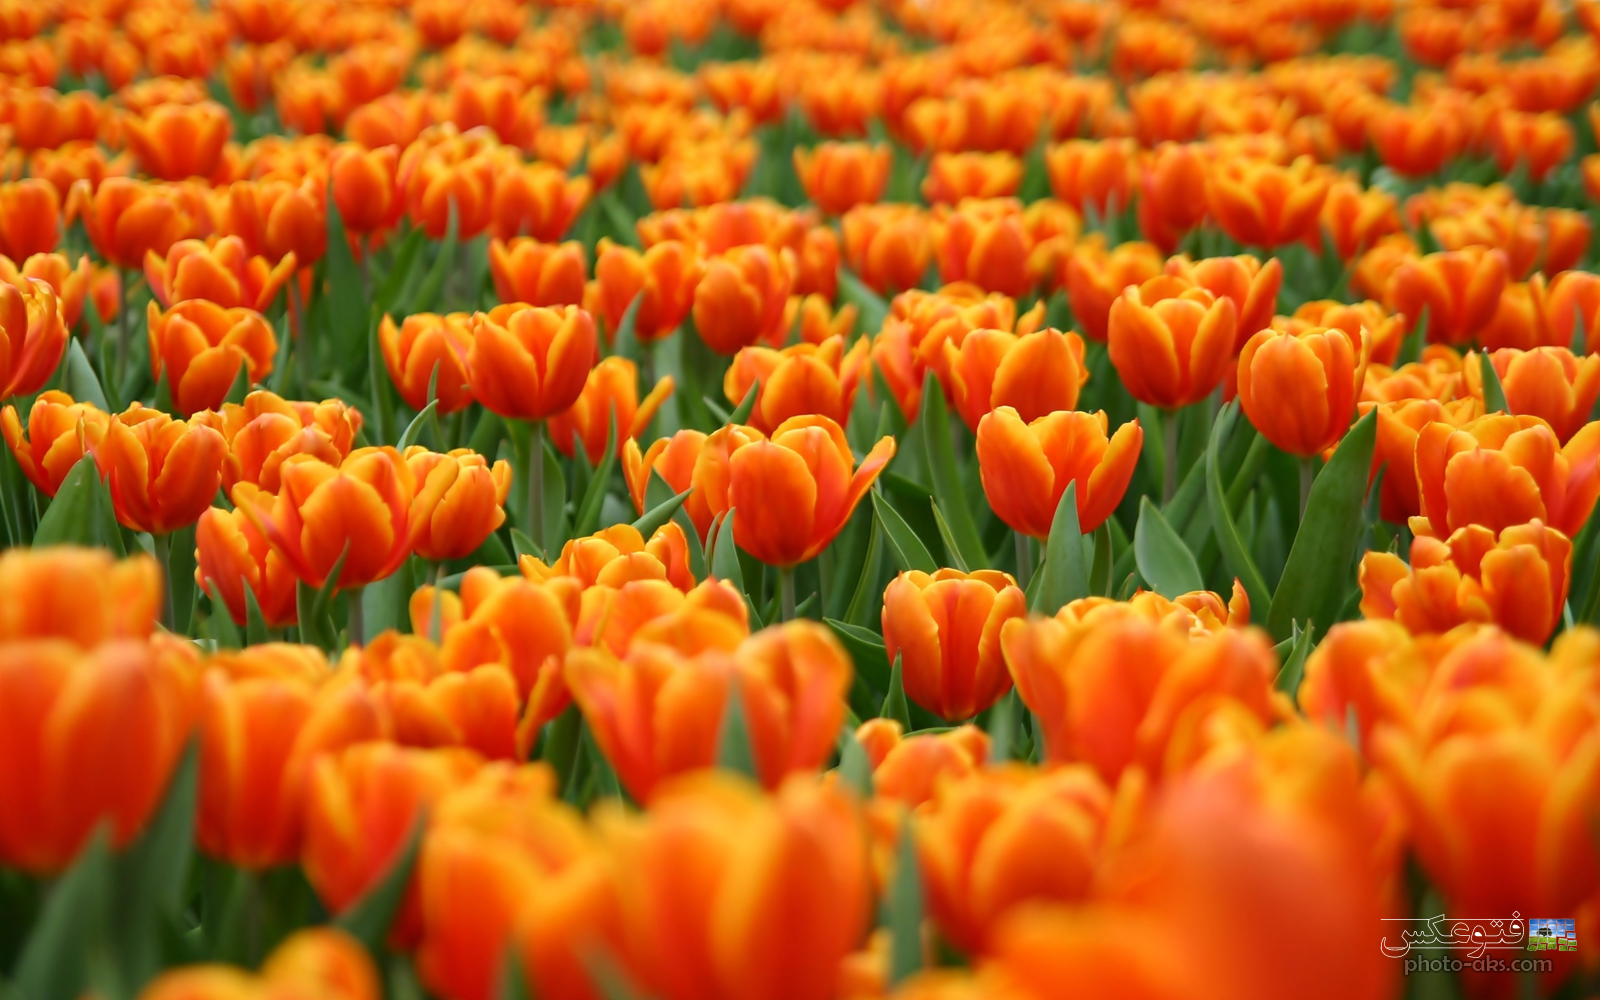 ,عکس گل لاله - گلهای لاله خوشگل -زیباترین غنچه گل لاله - پس زمینه گل لاله - aks gole lale - aks gholeh laleh - tulips flowers - tulip - ghgiفتوعکس | photo-aks,[categoriy]